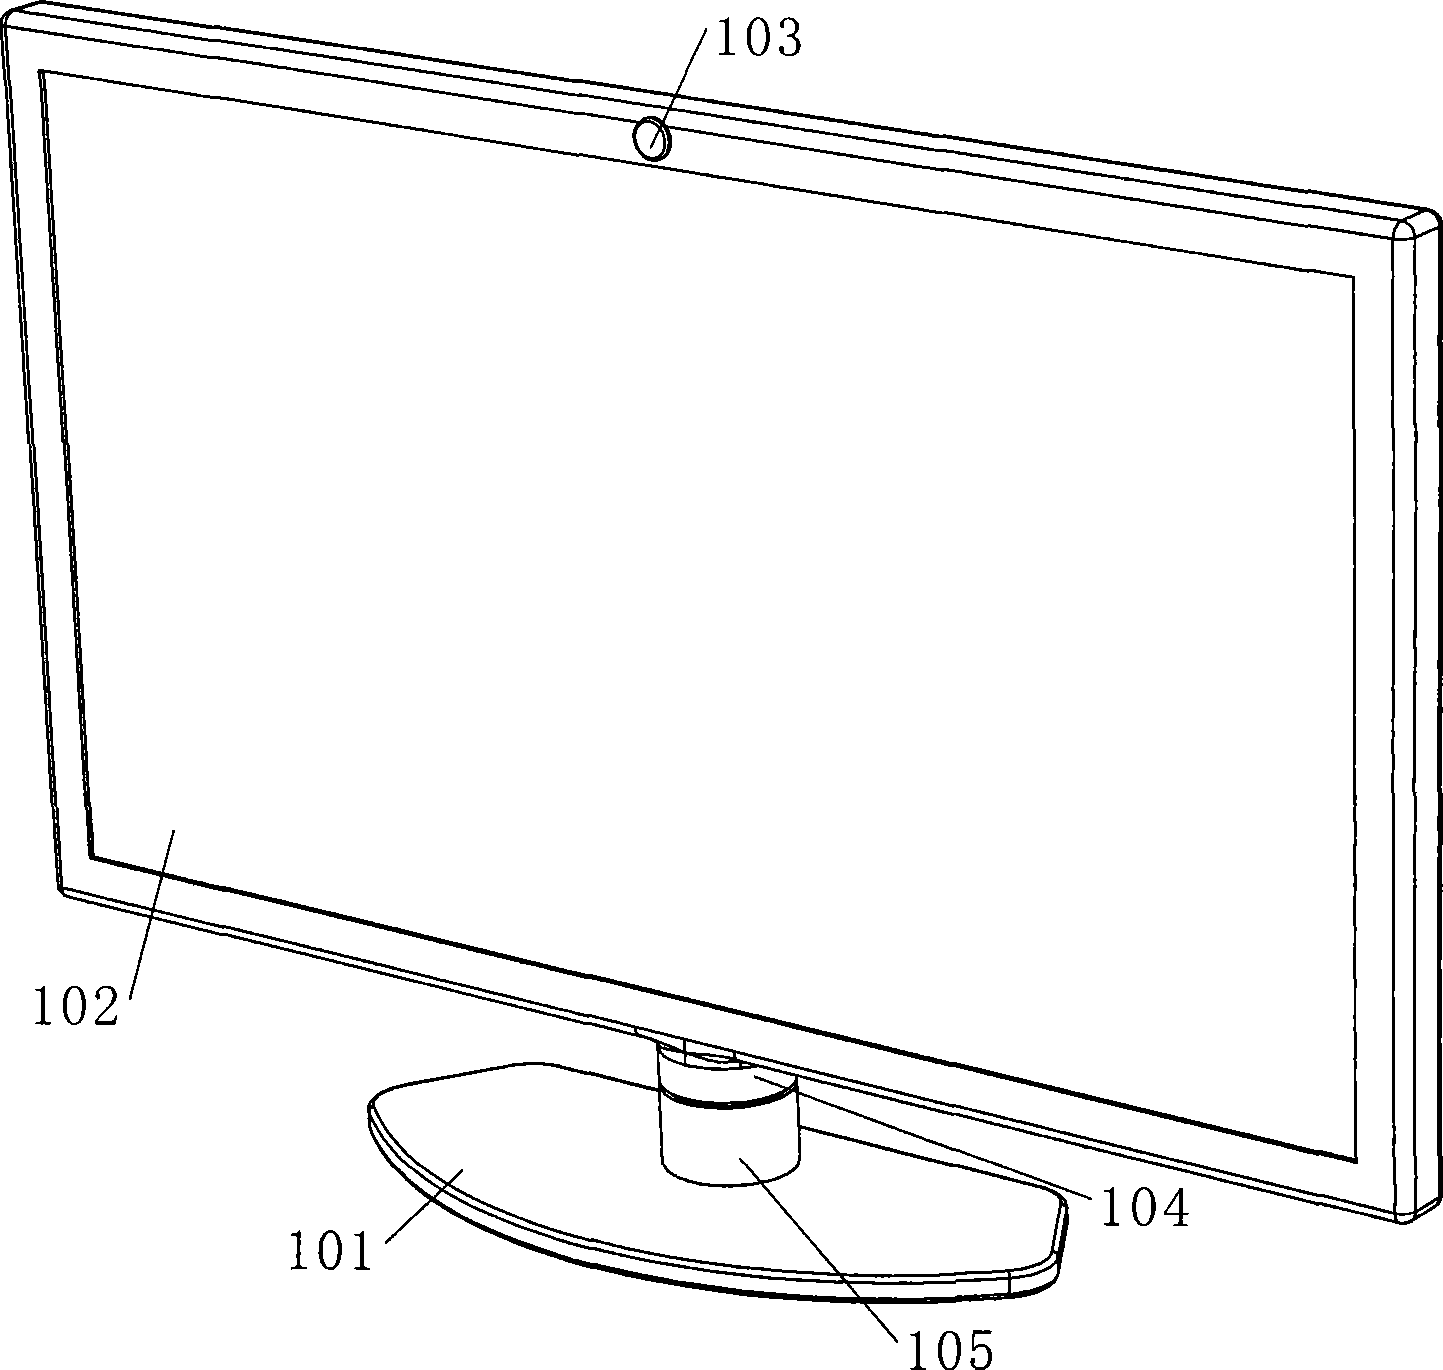 Display screen adjustment device and method